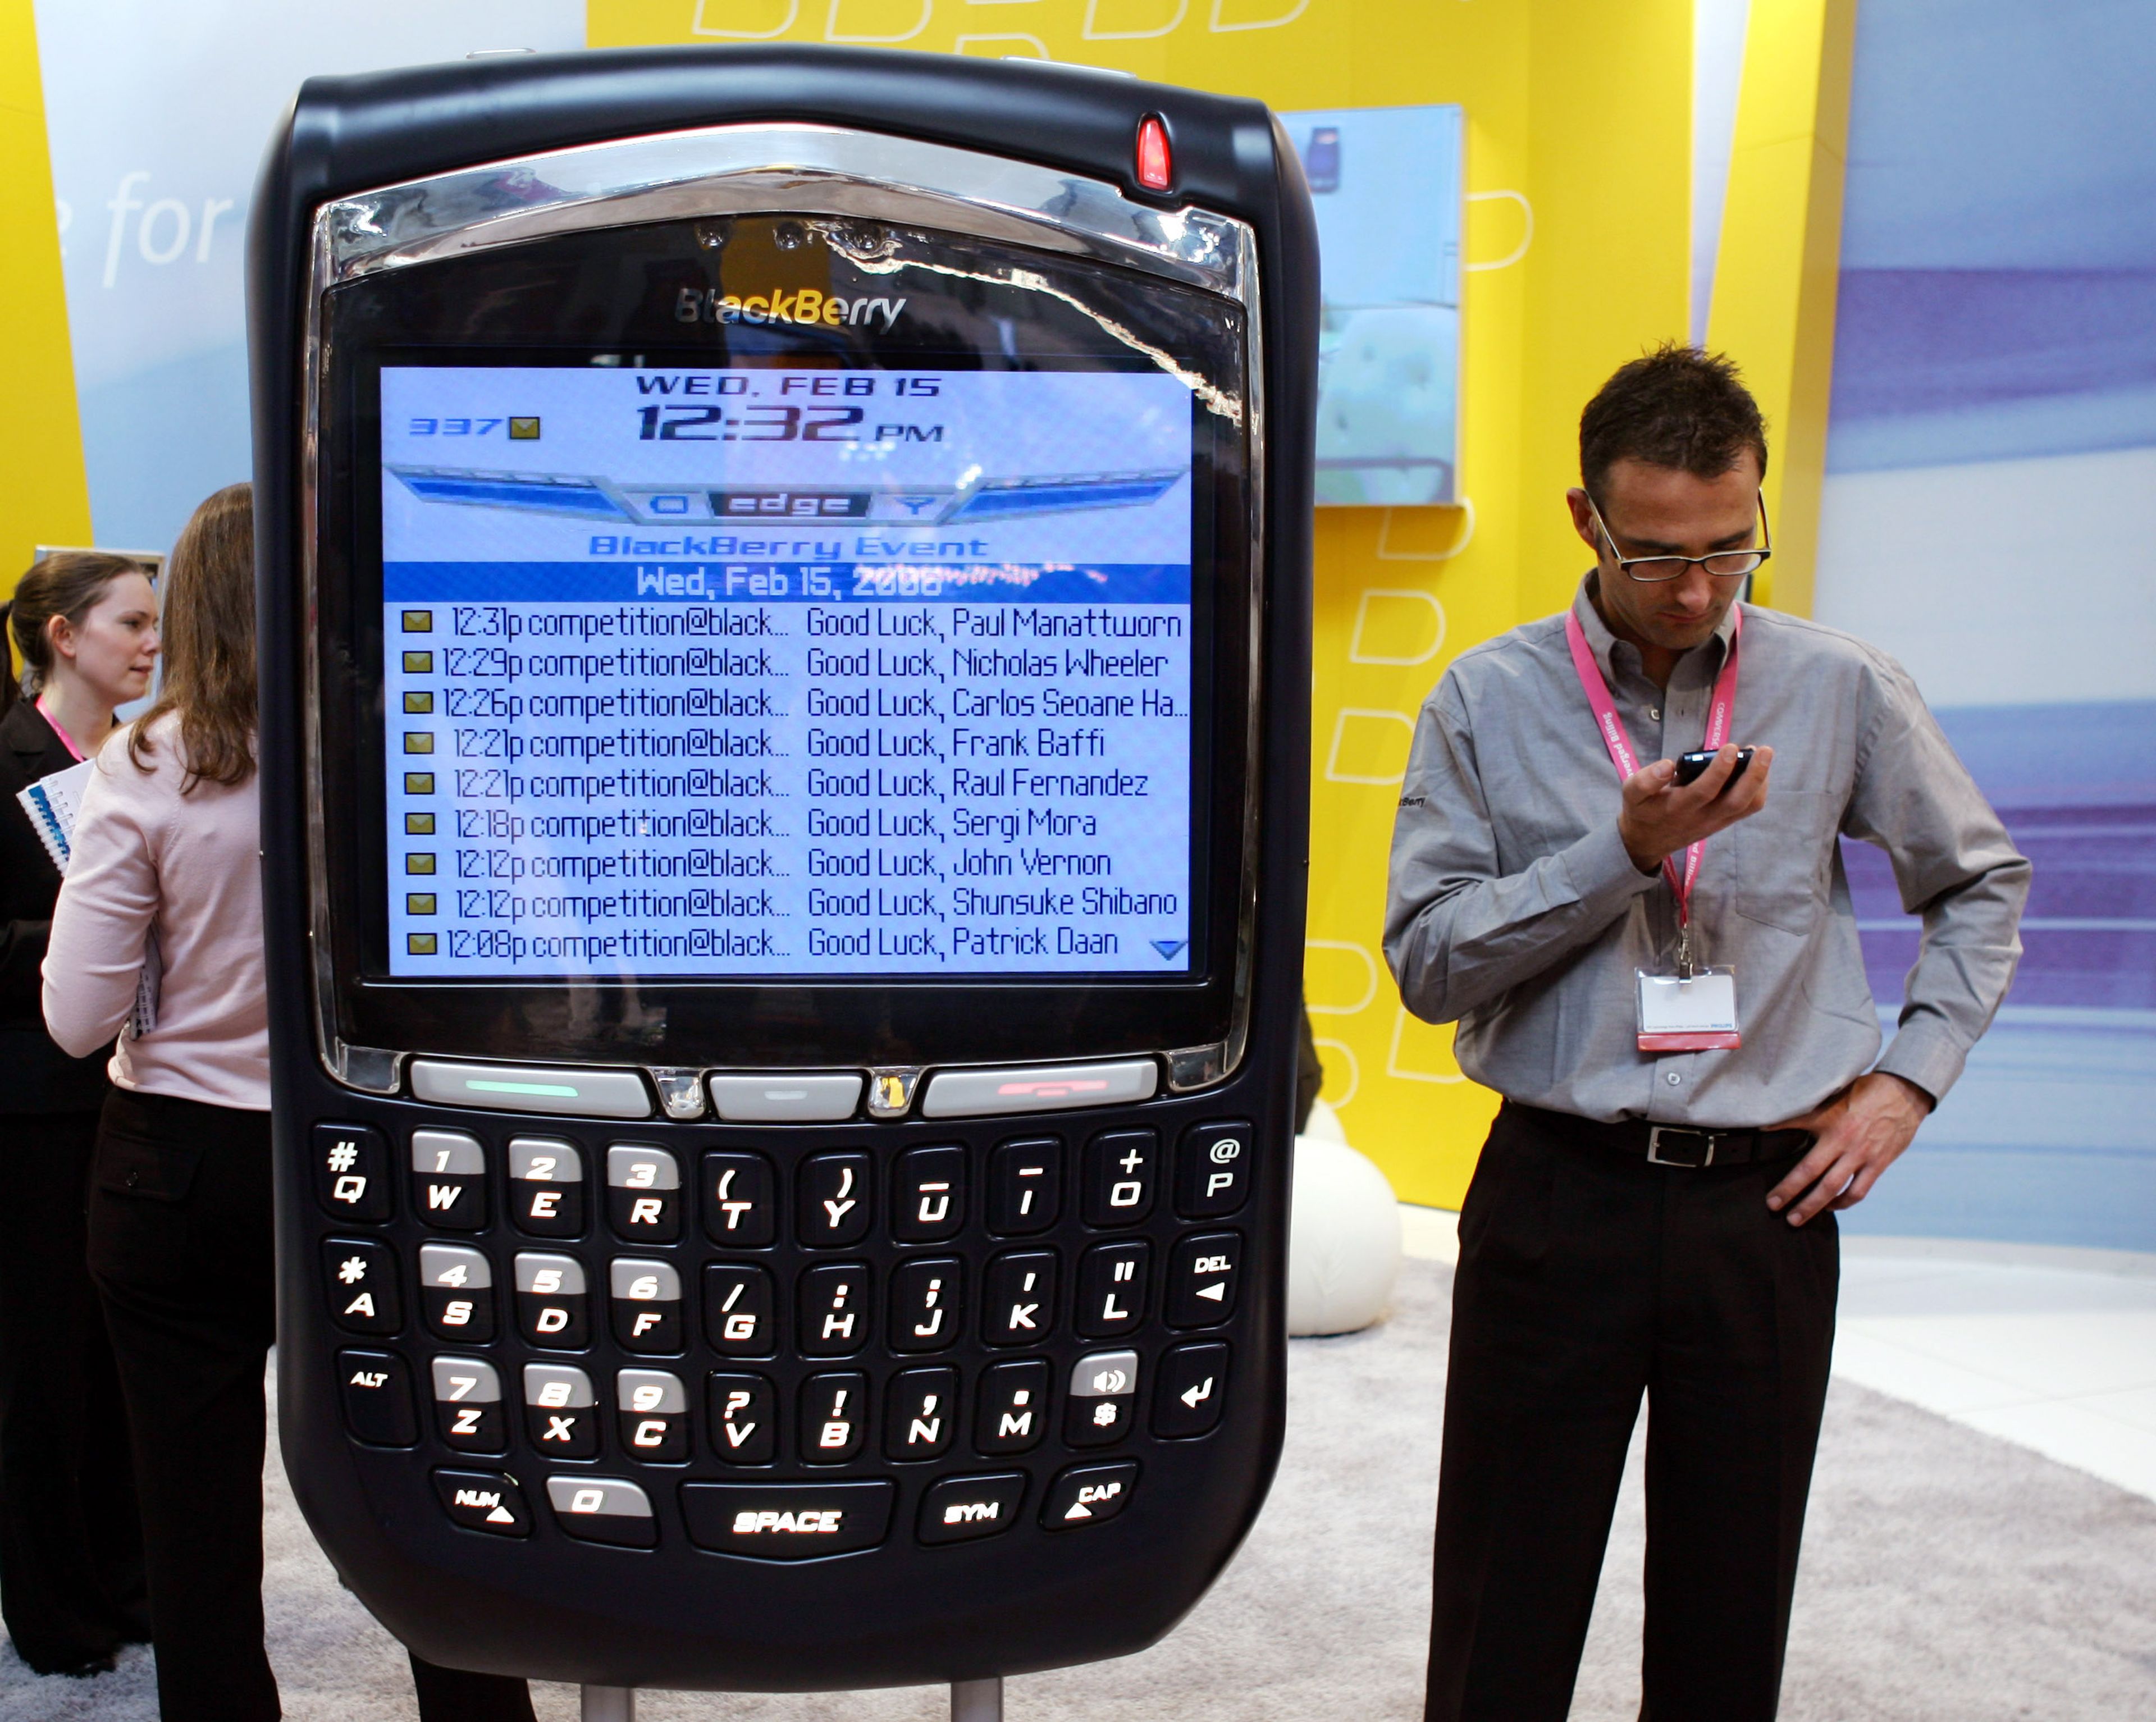 Stand de BlackBerry en el Mobile World Congress de Barcelona de 2006.